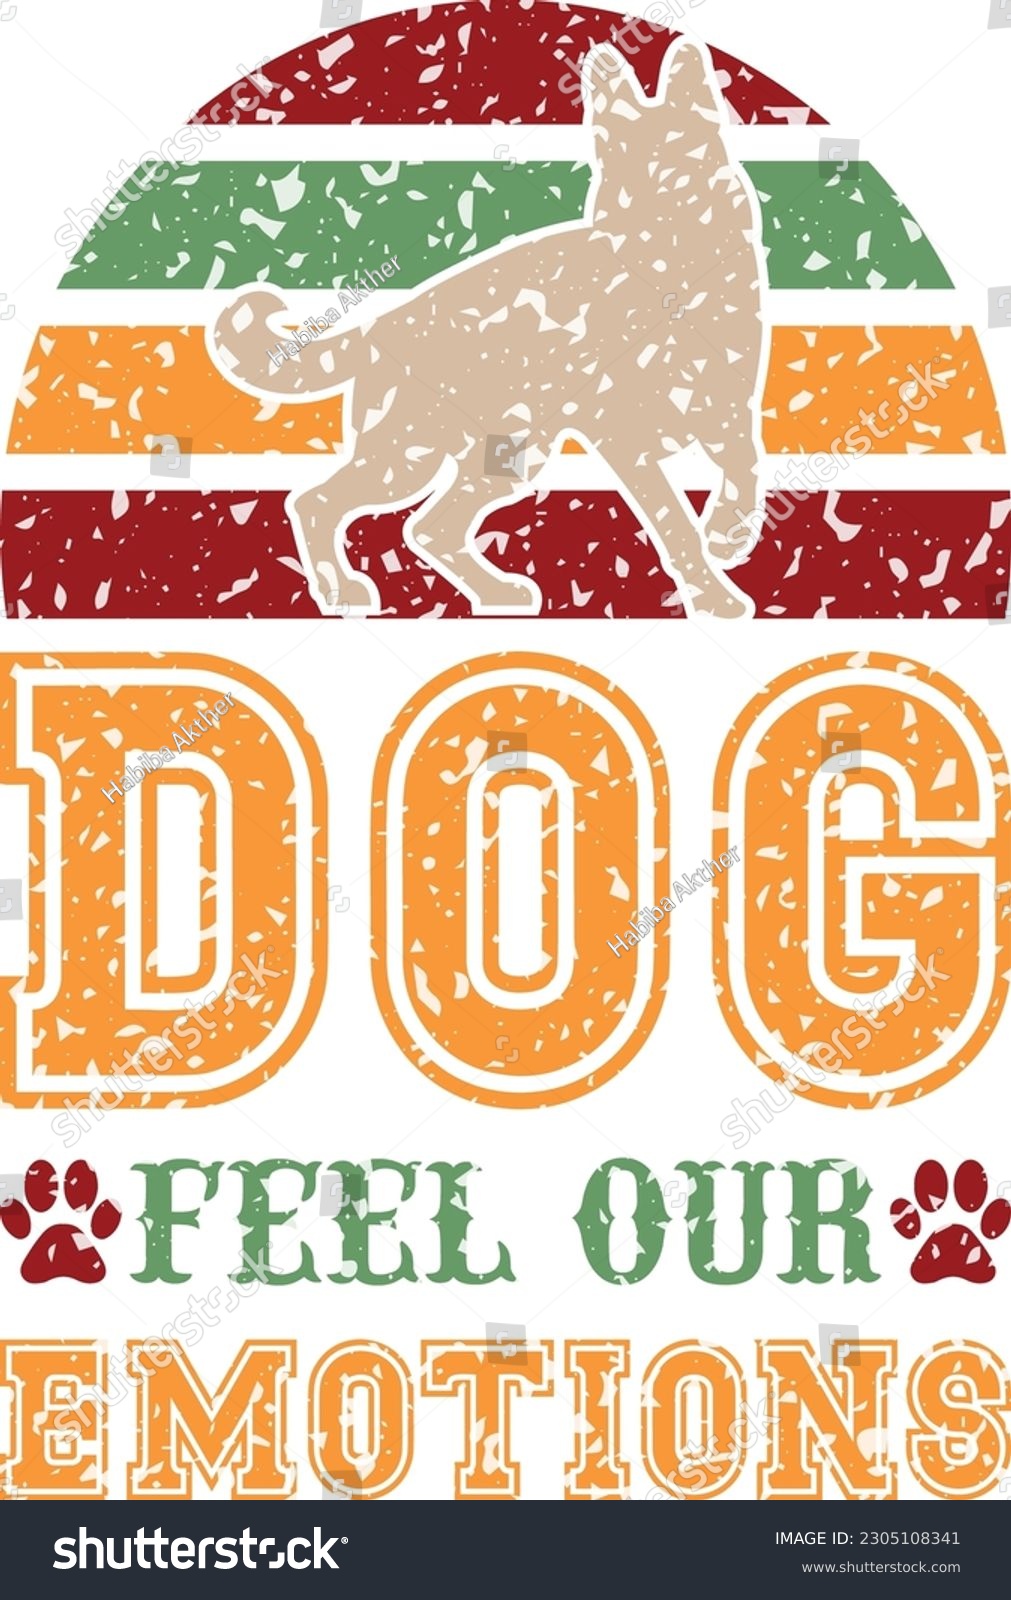 SVG of Dog Feel Our Emotions,Dog Mom Shirt,Dog Lover Shirt,Dog Mom,Fur Mama,Gift For Dog Lover,Dog Mama Shirt,mug svg,paw svg,dog quote,Vintage,American,Funny,Pet, svg